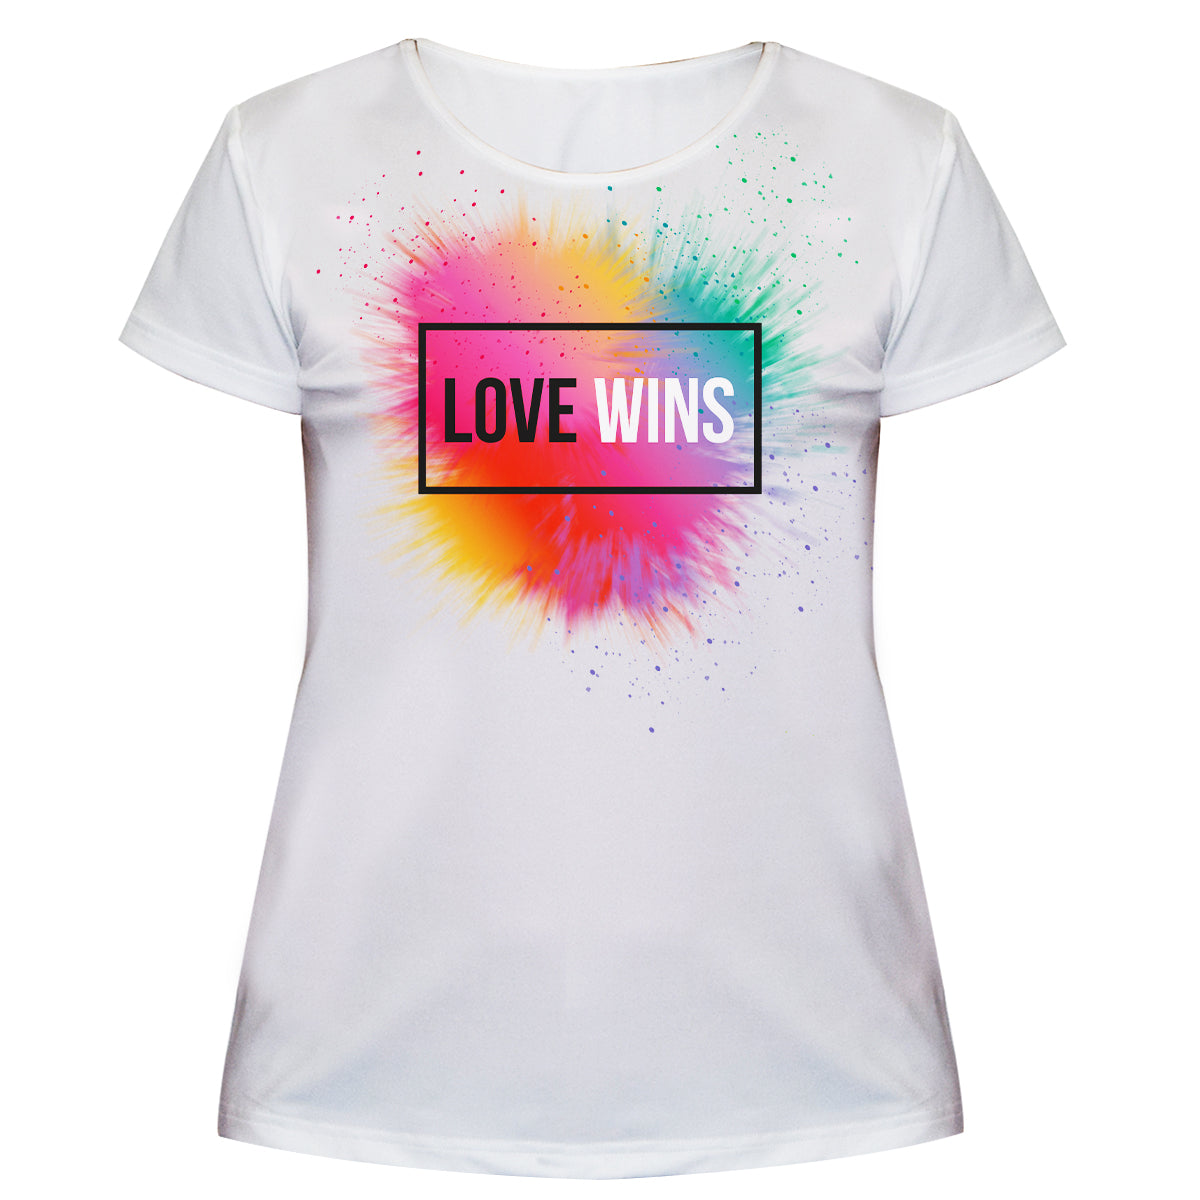 Love Wins White Short Sleeve Tee Shirt